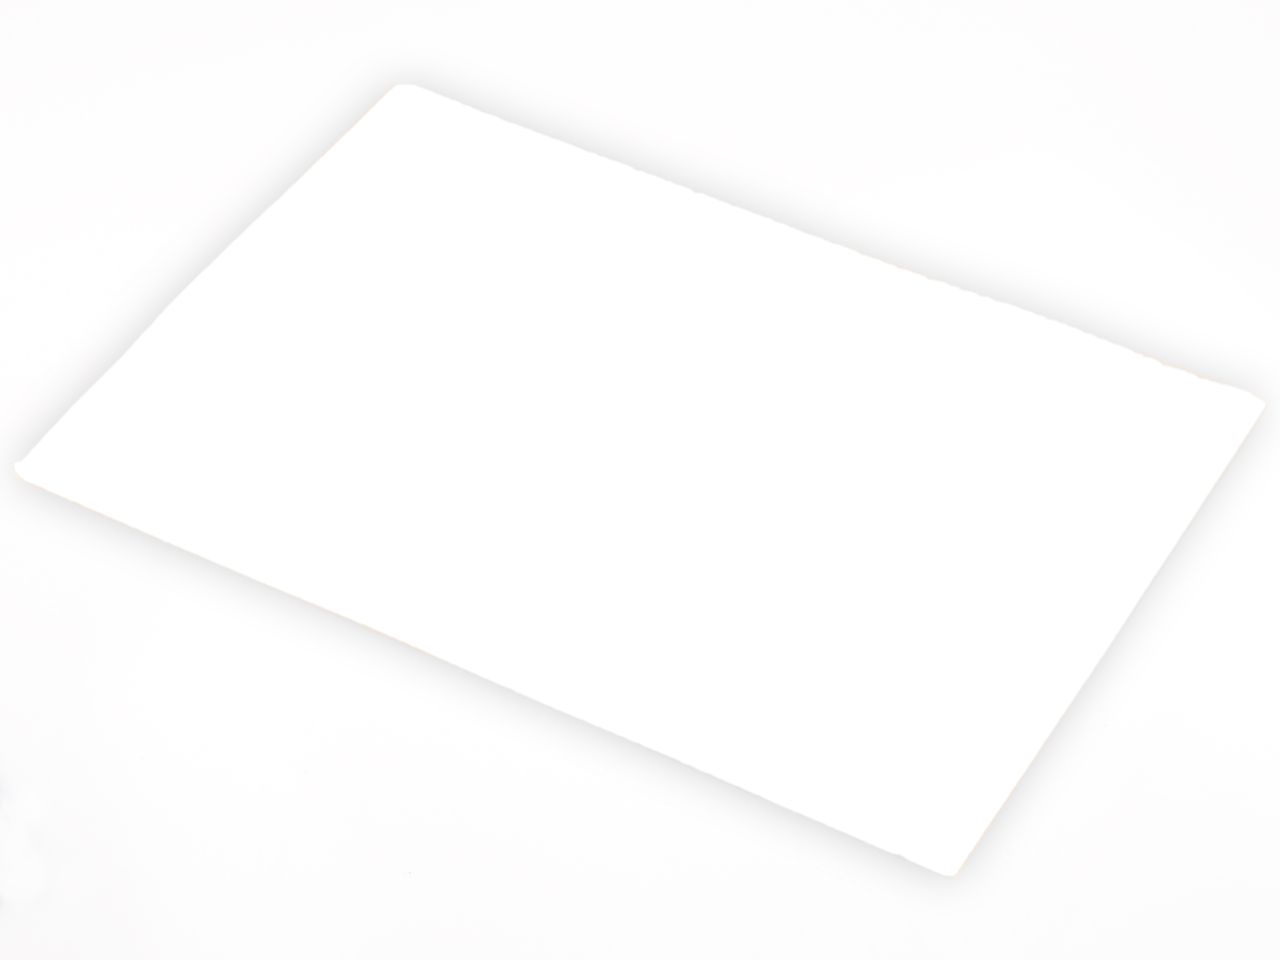 Esspapier: Wafer Paper AD-2 0,4 mm, Weiß, 25 Stück á 21 x 29,7 cm (A4)